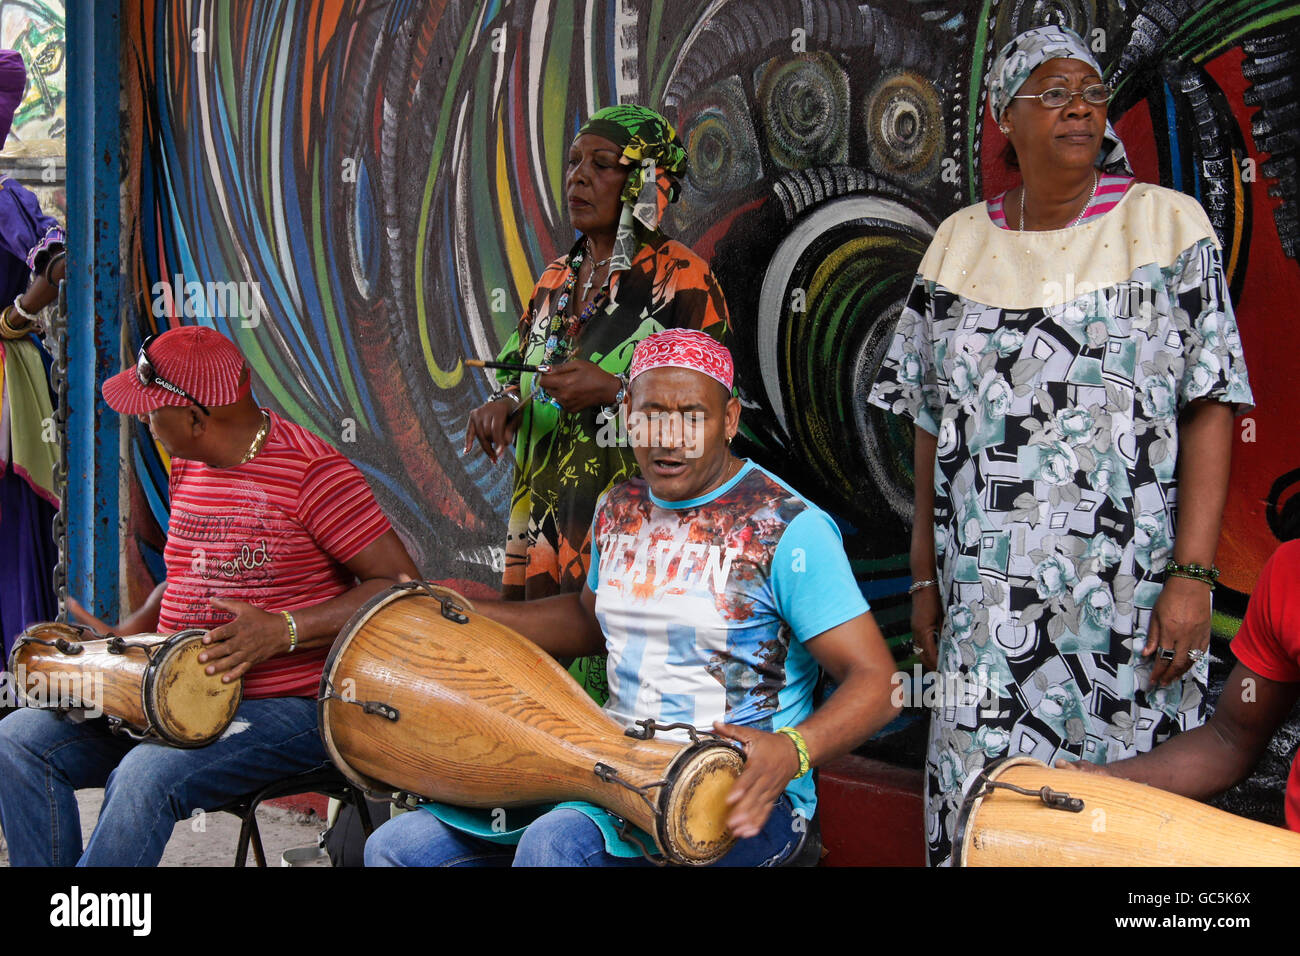 Musicians performing at Callejon de Hamel (Hamel's Alley) in Cayo Hueso neighborhood, Havana, Cuba Stock Photo